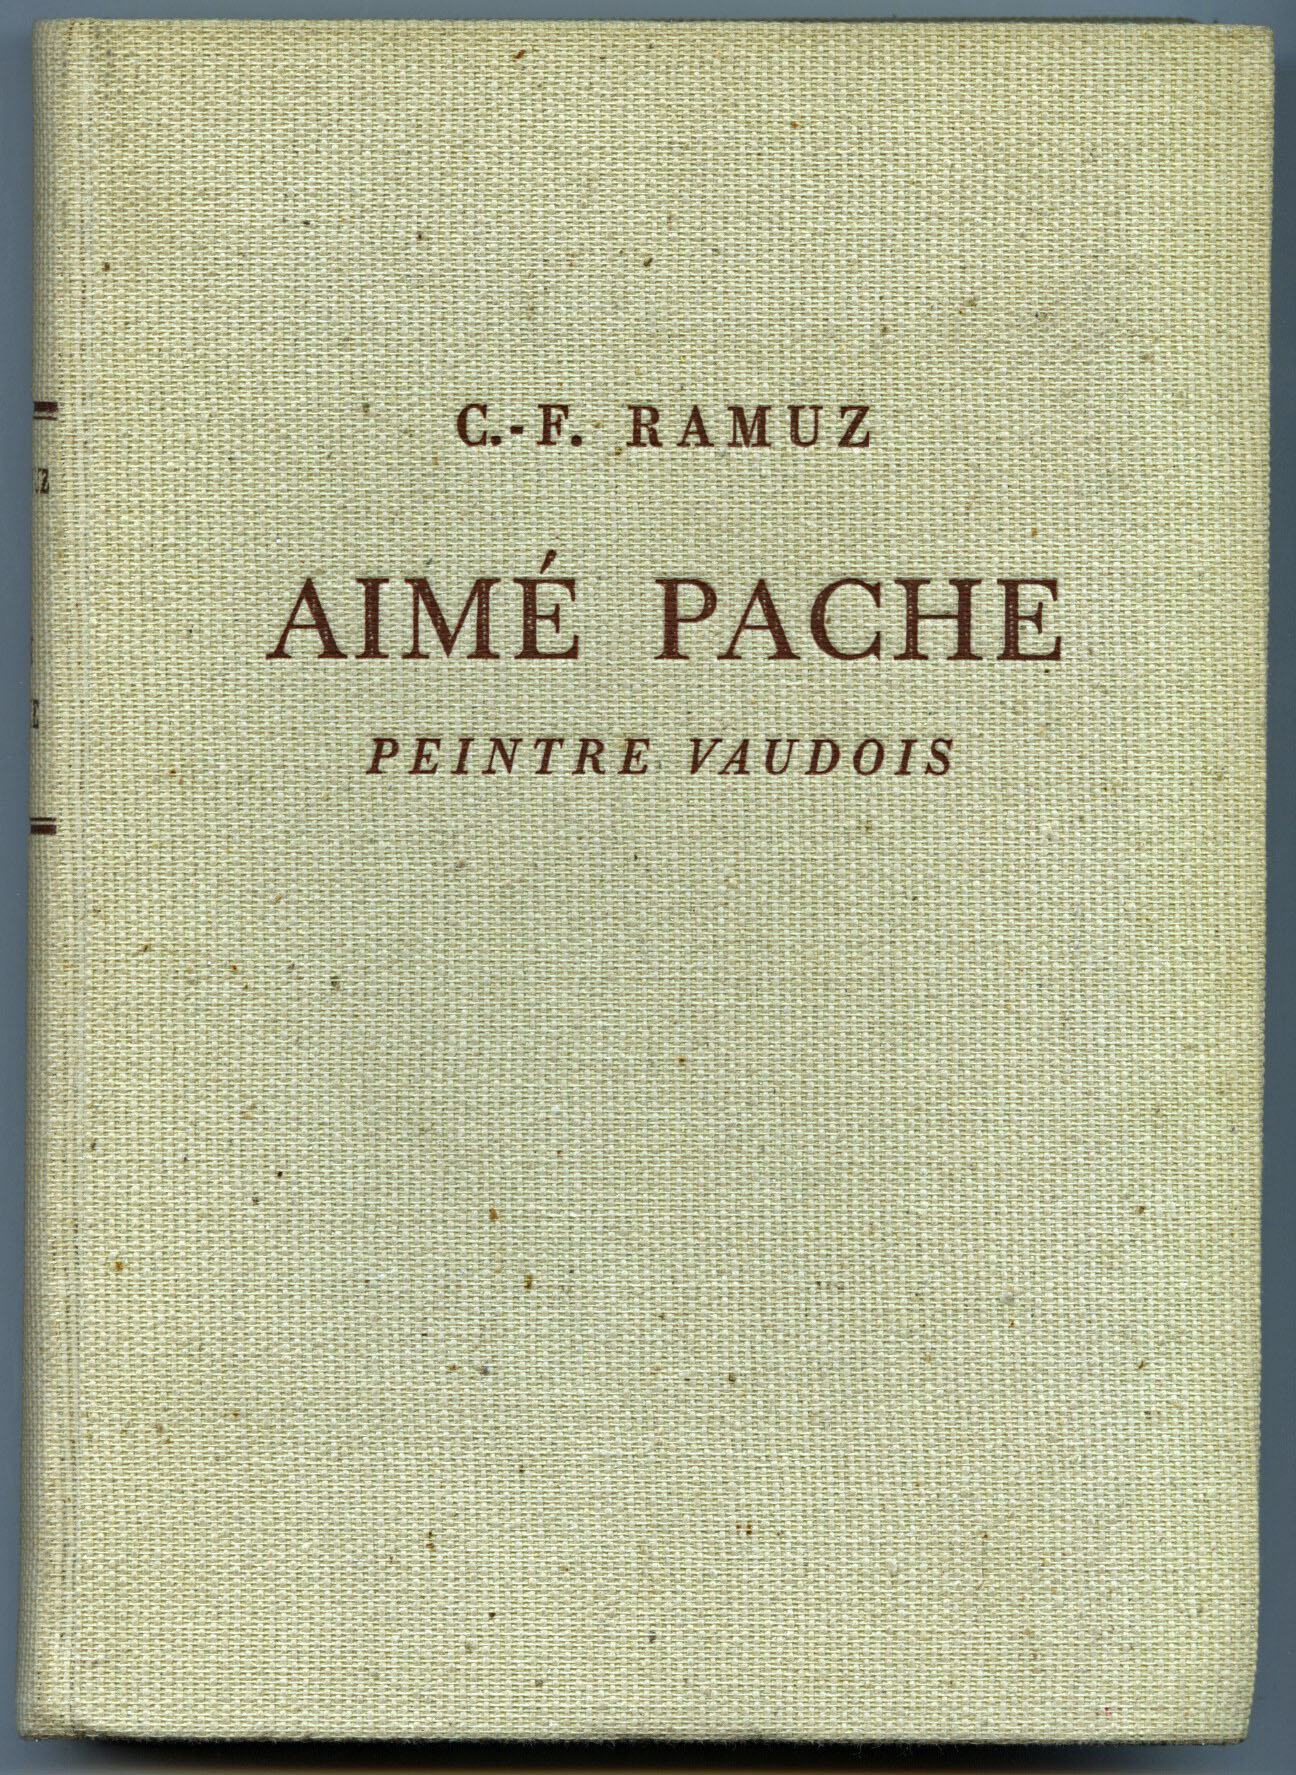 RAMUZ, C. F.  Aimé Pache. Peintre Vaudois. 